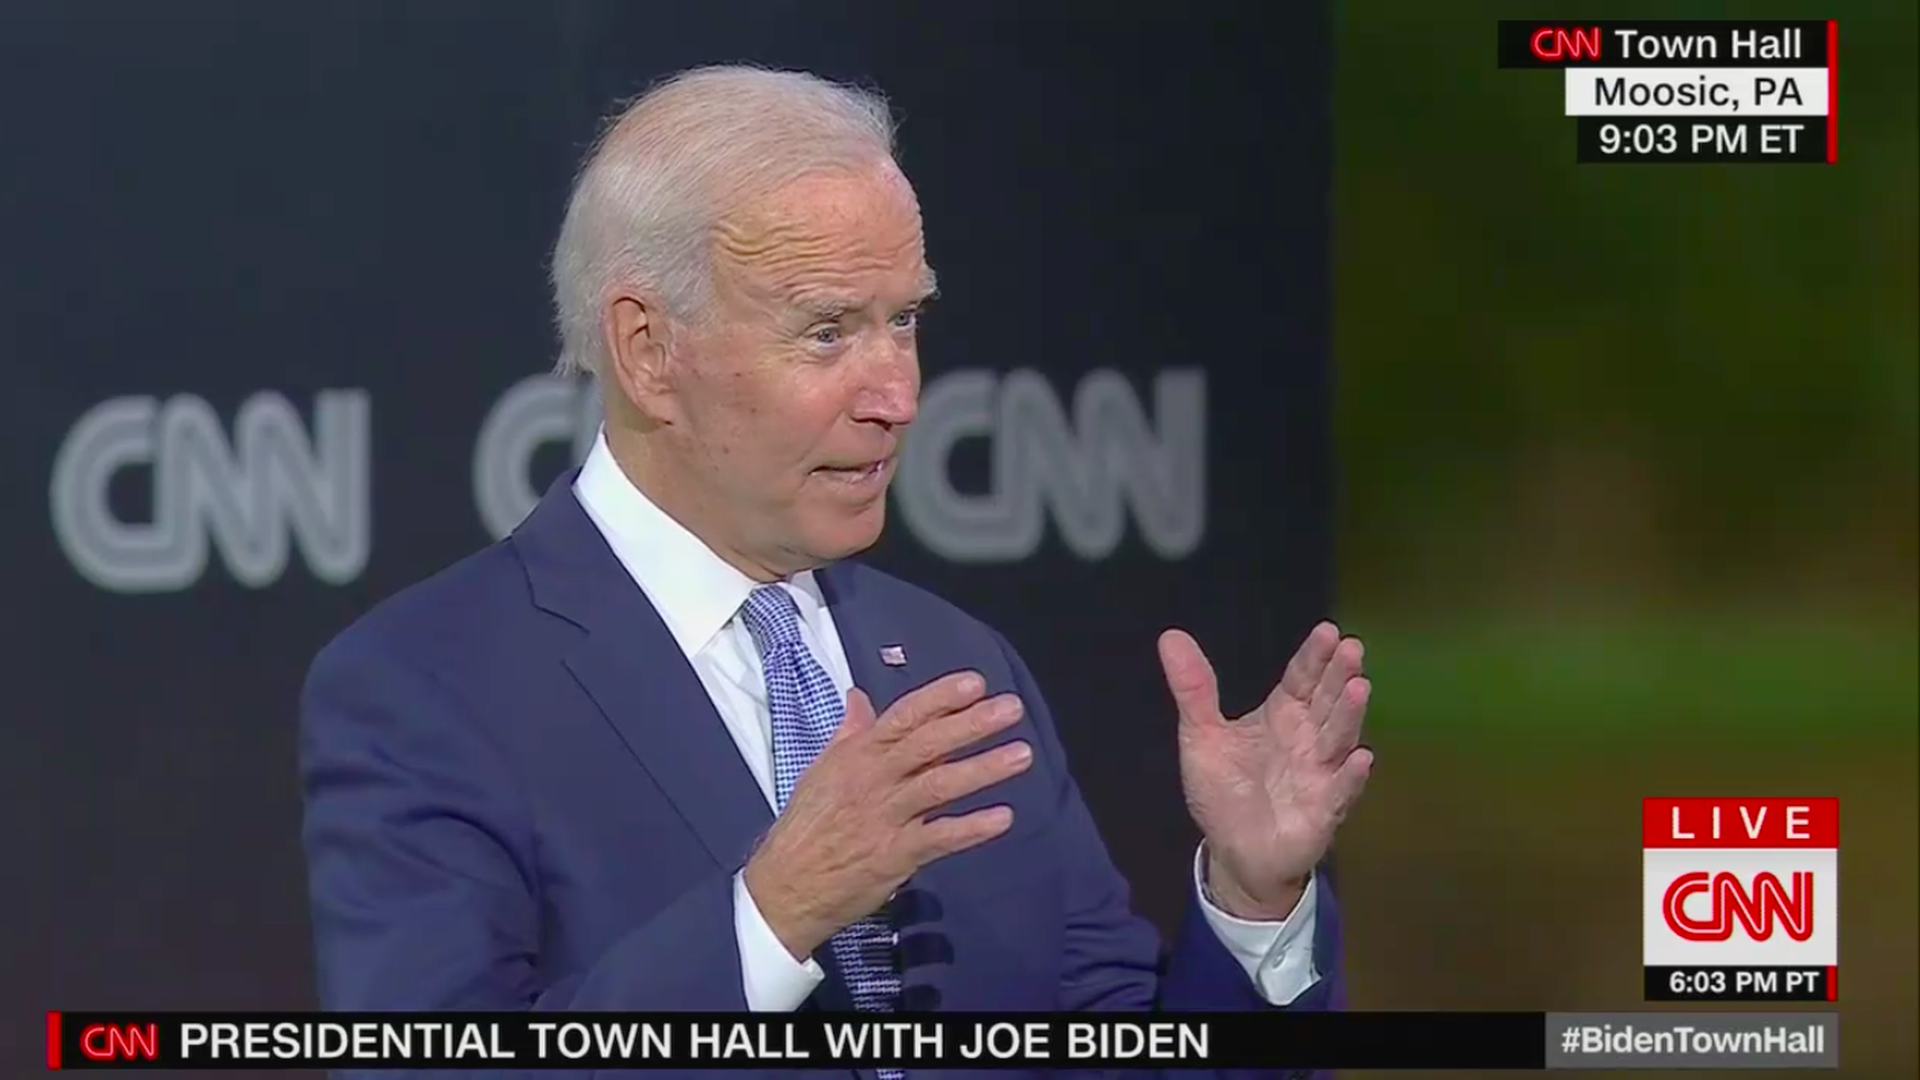 Biden speaks while gesturing with his hands 